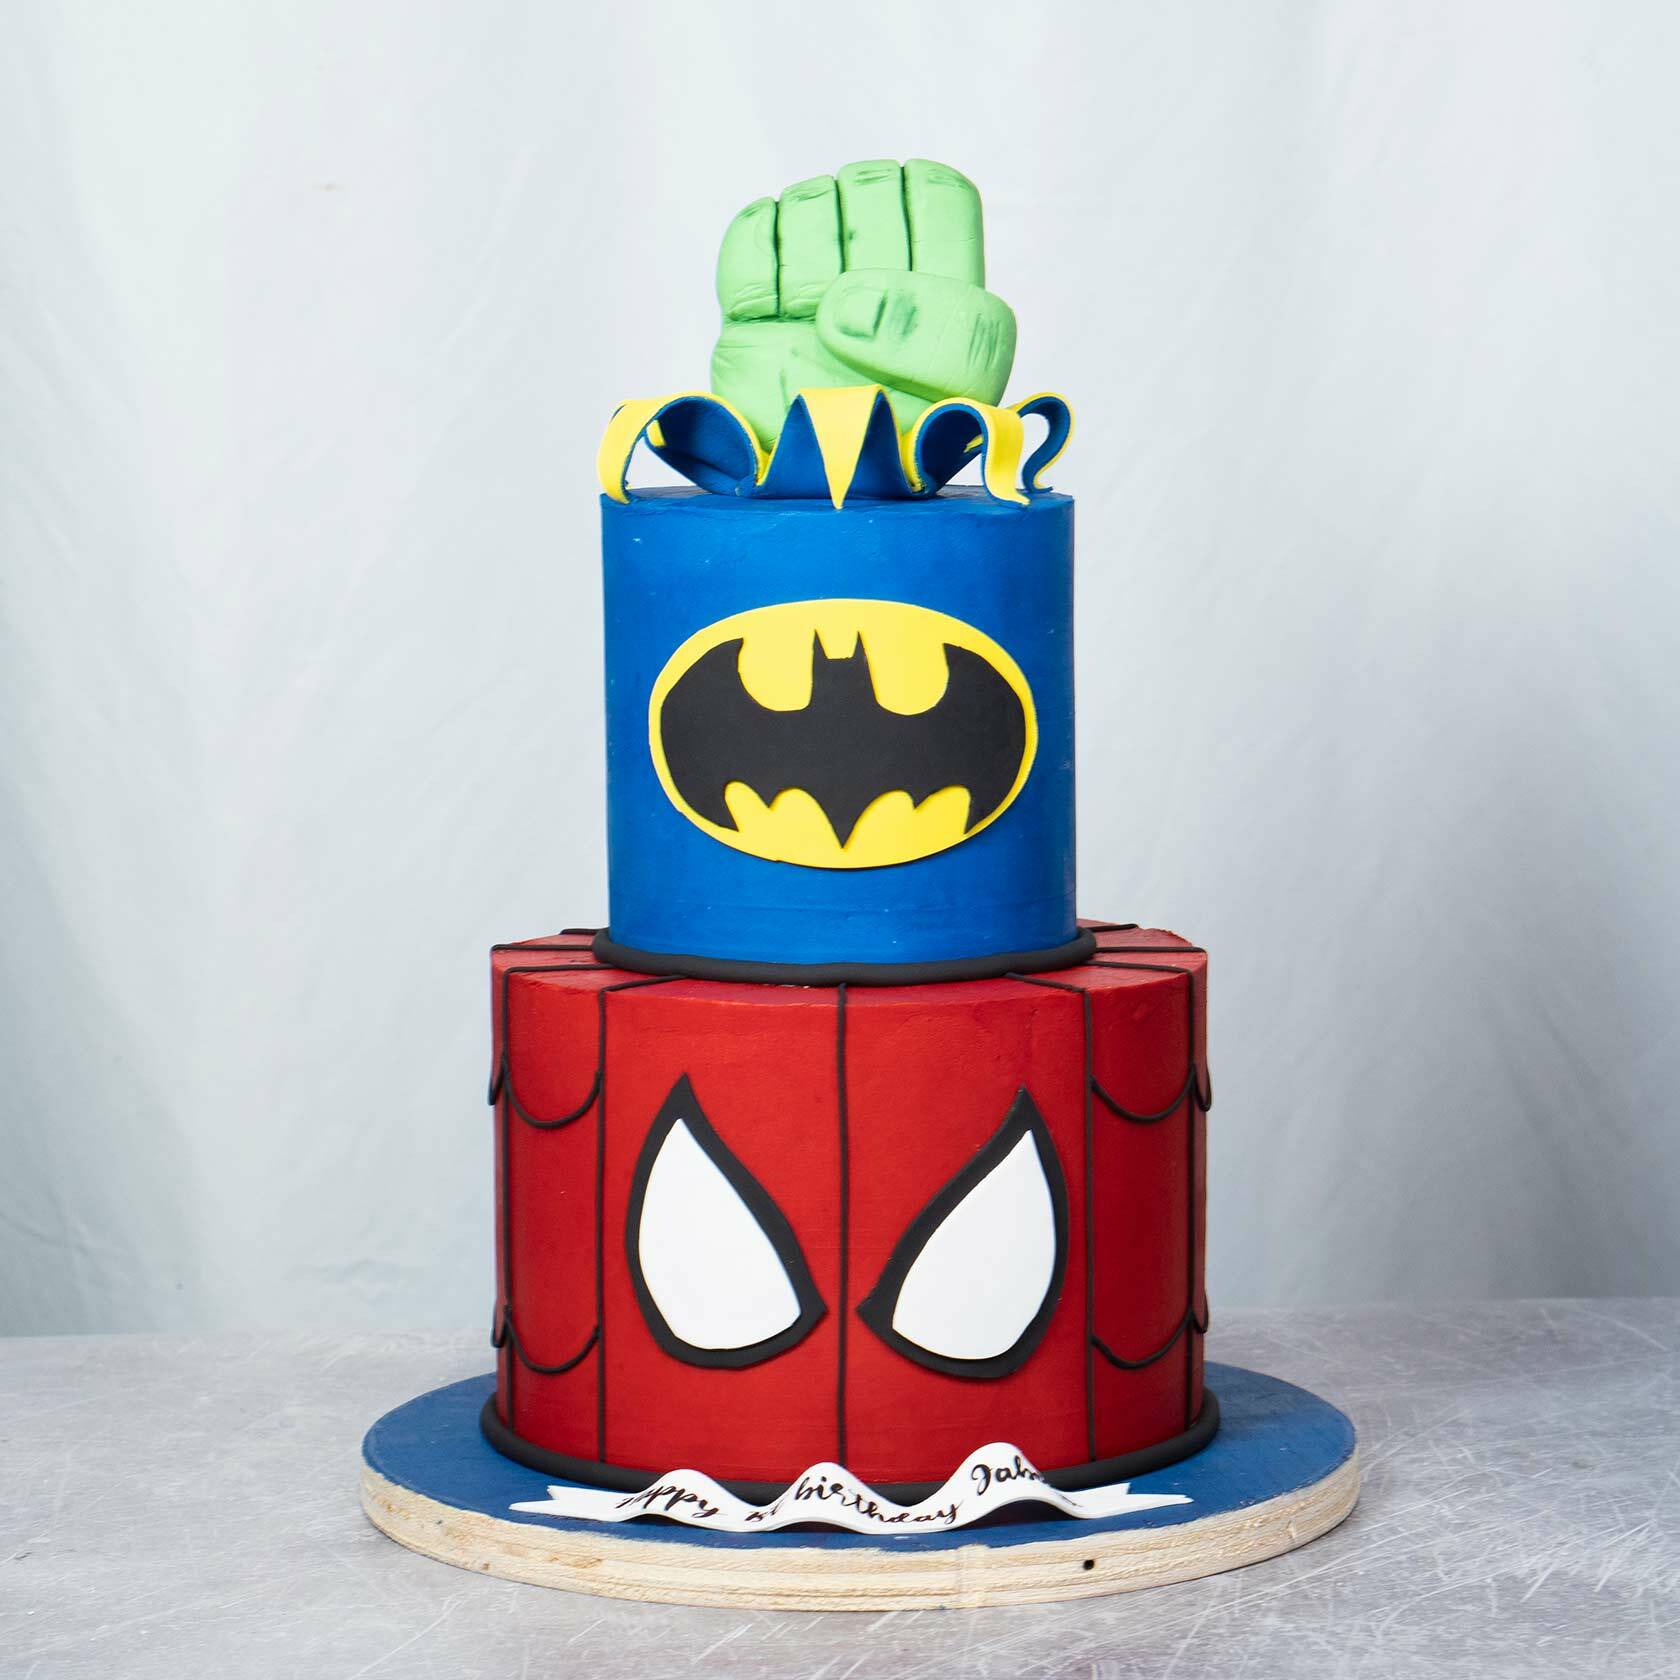 San Pietro - Can't pick a favourite? We gotchu😉 #dc #marvel #cake  #birthdaycake #birthday #superhero #spiderman #hulk #batman #superman  #bakery #montreal | Facebook